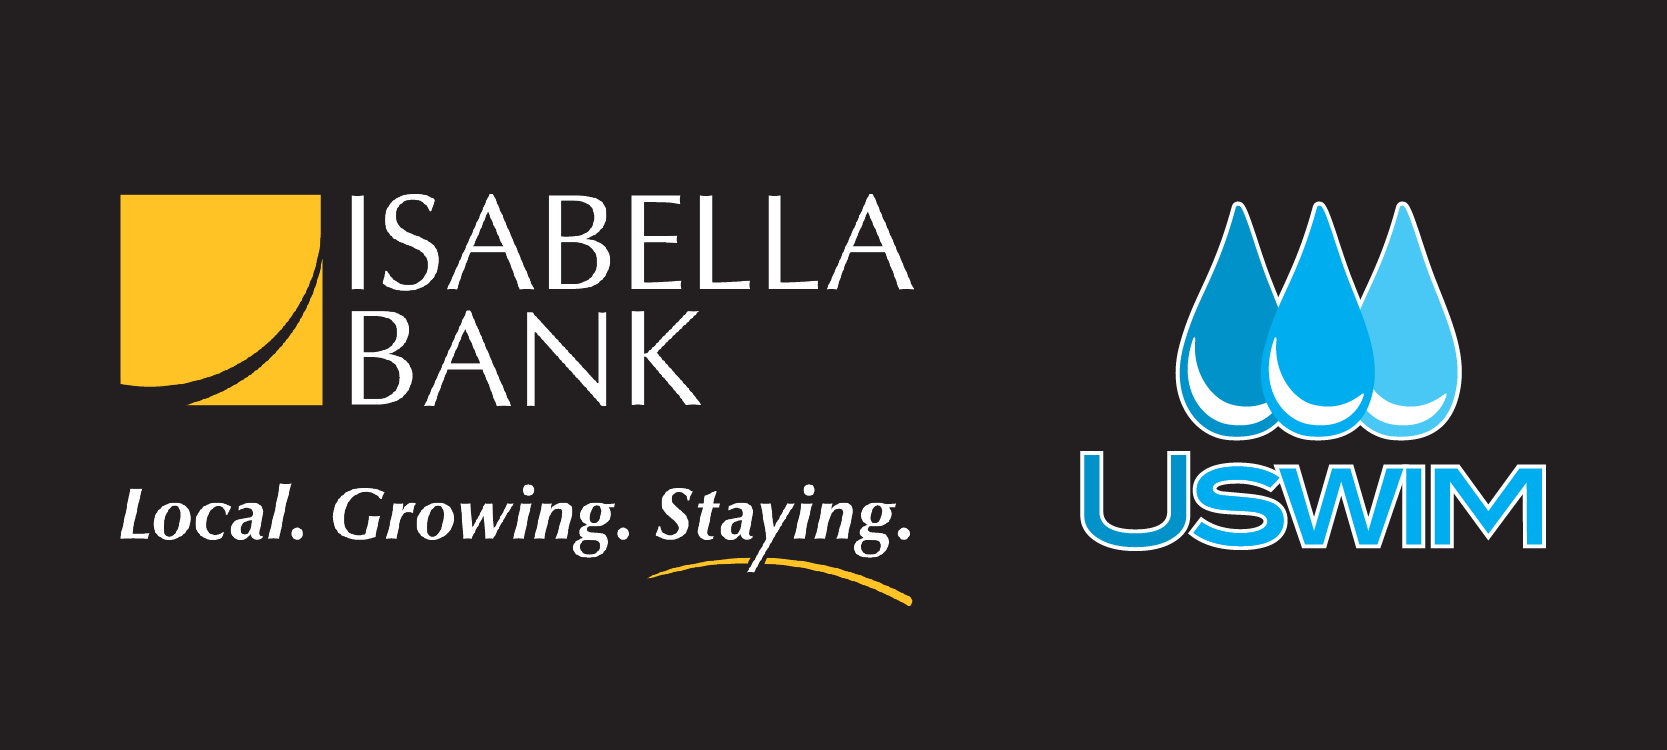 Isabella Bank Logo with Slogan: Local. Growing. Staying. To right: USwim Logo